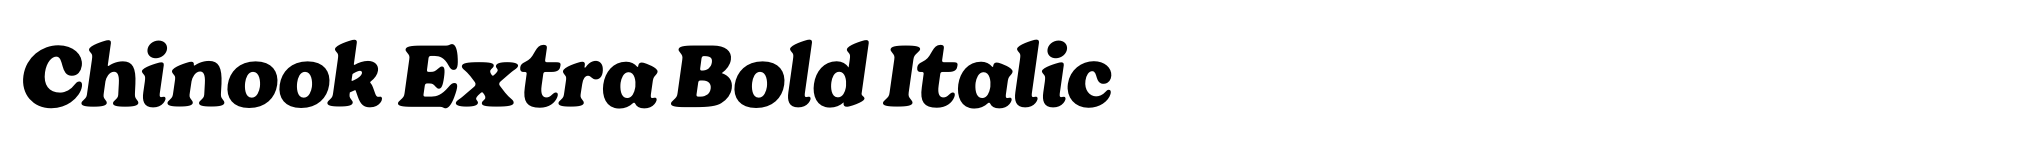 Chinook Extra Bold Italic image